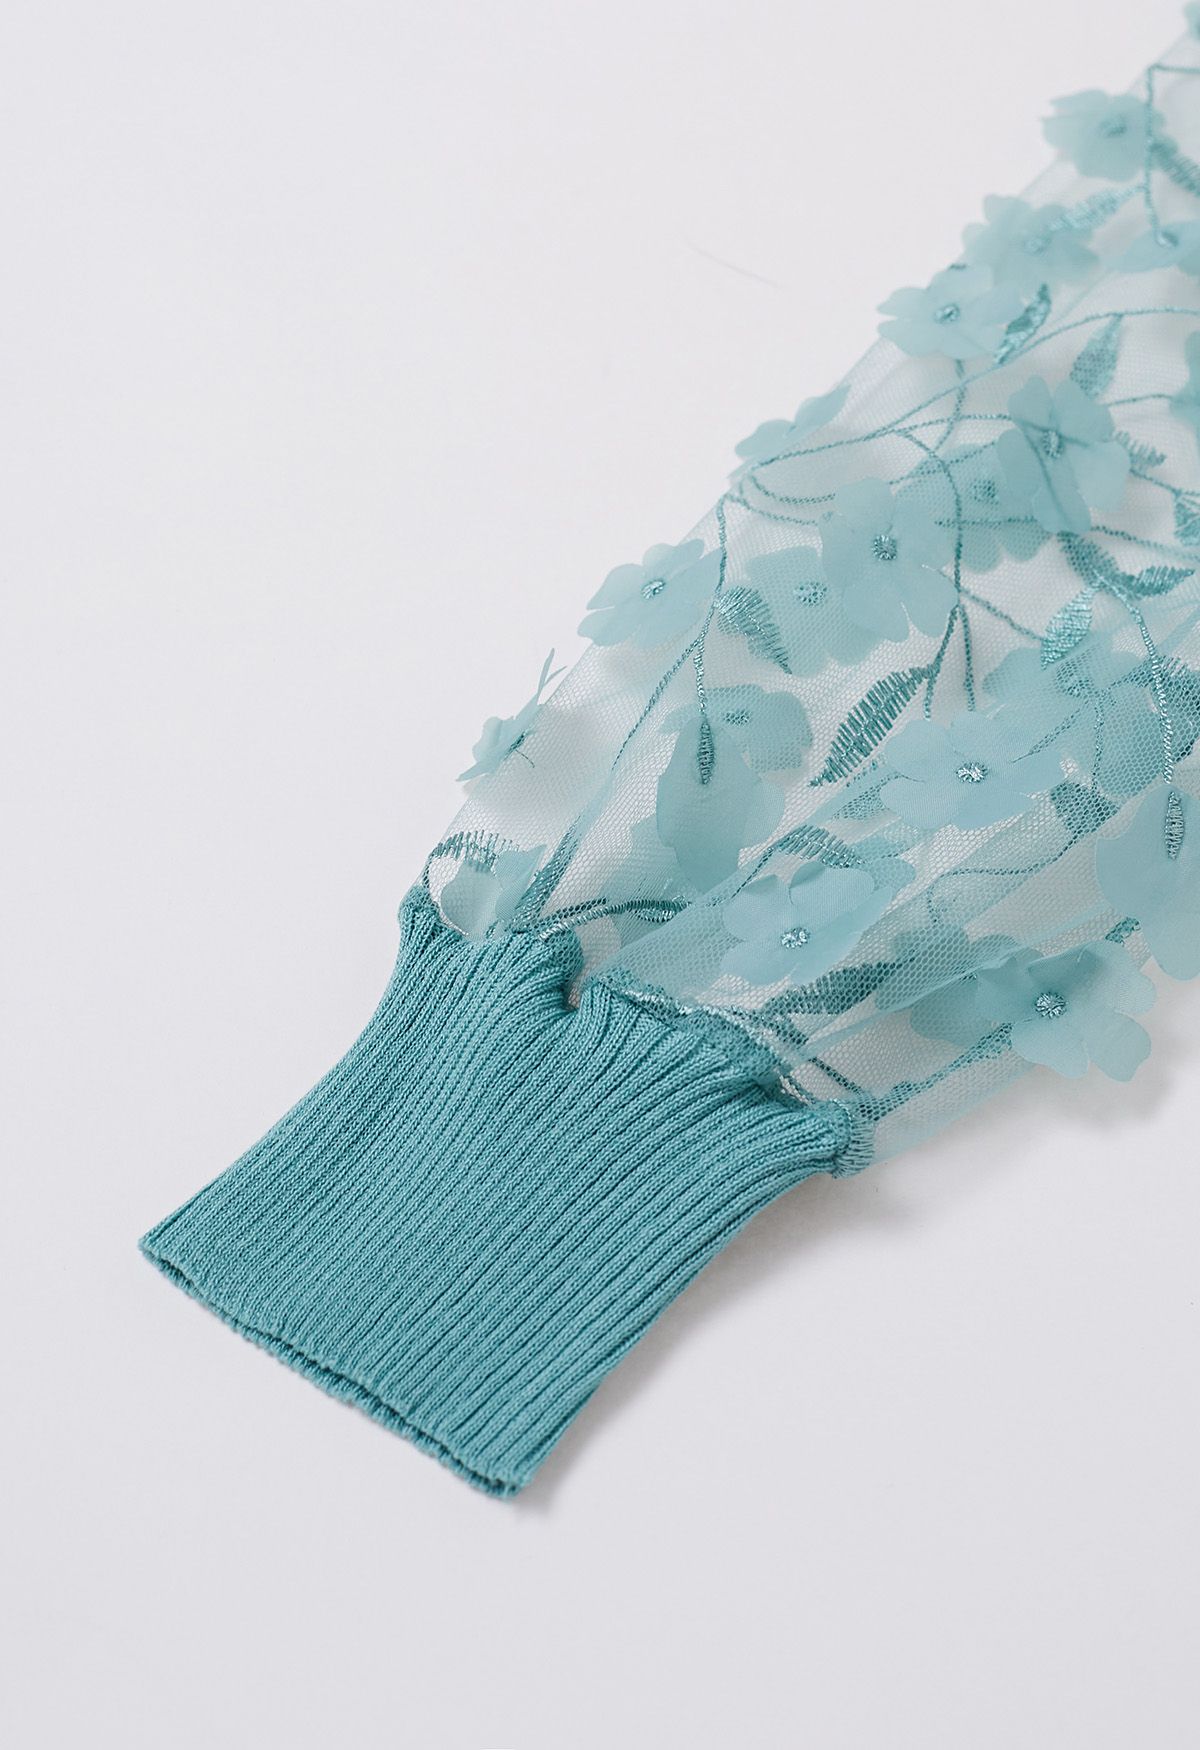 3D Floret Mesh Sleeves Spliced Knit Top in Teal